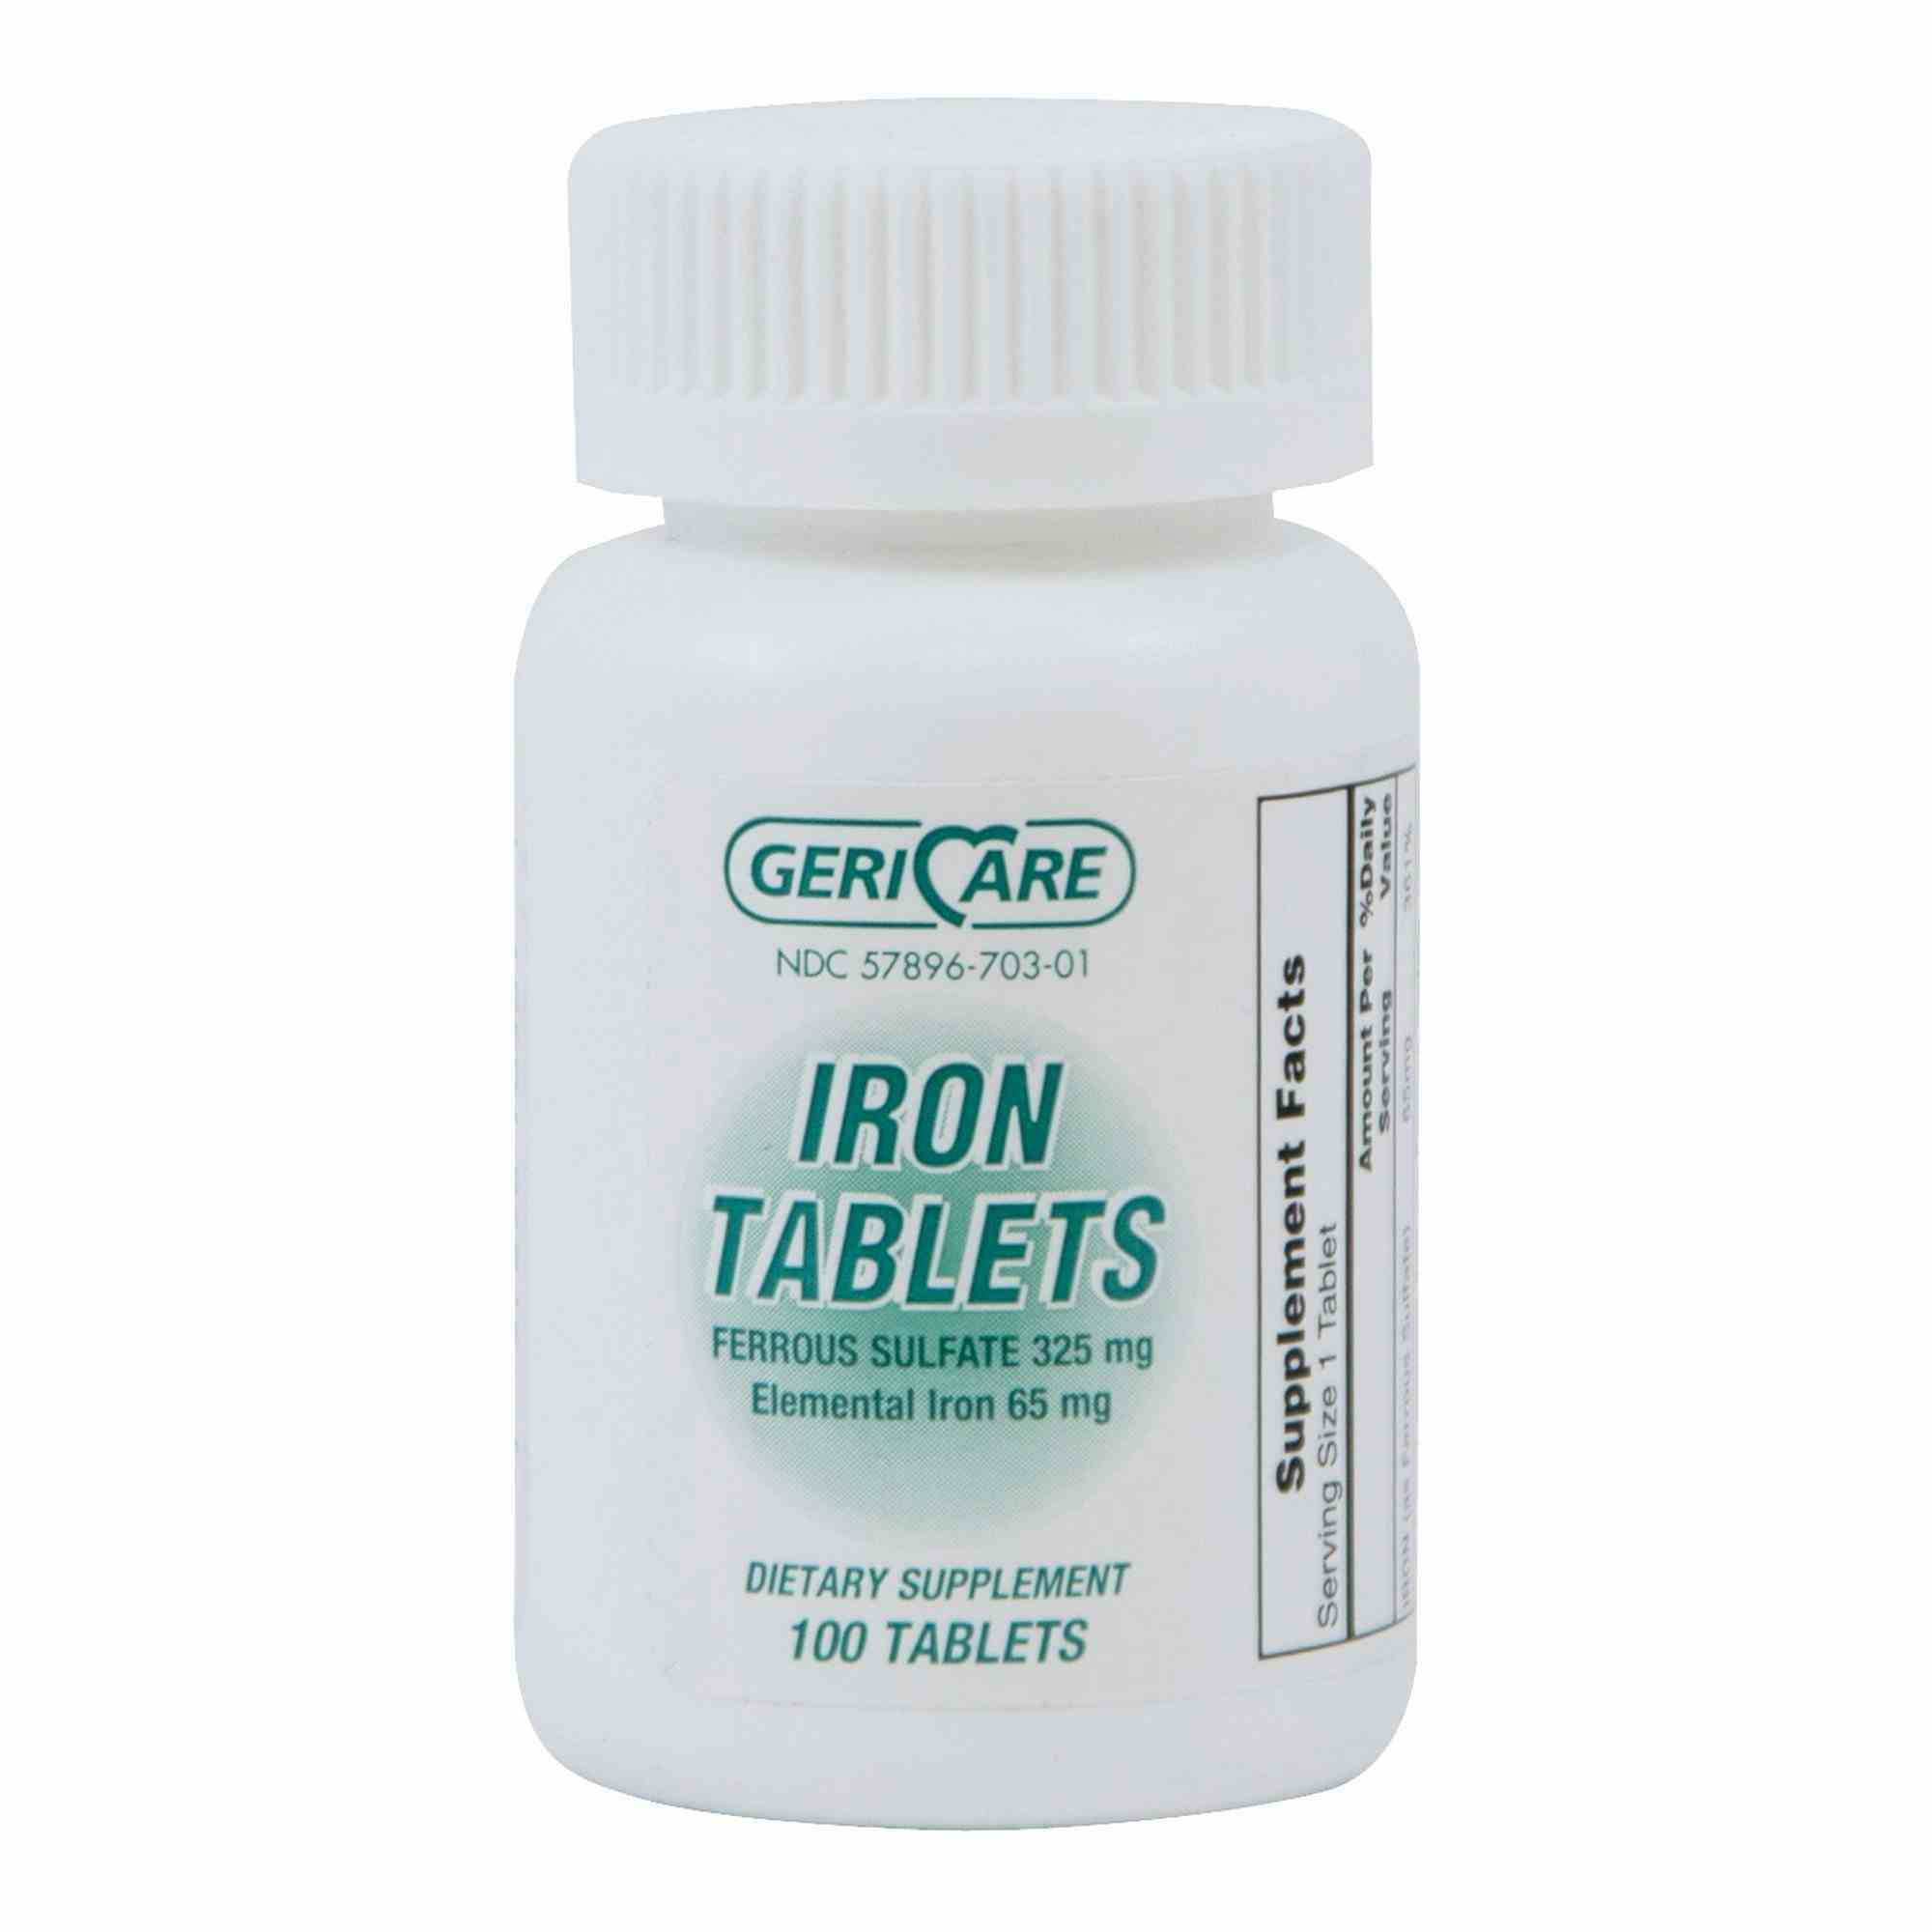 Geri-Care Iron Tablets, 325 mg, 100 Tablets, 60-703-01, 1 Bottle